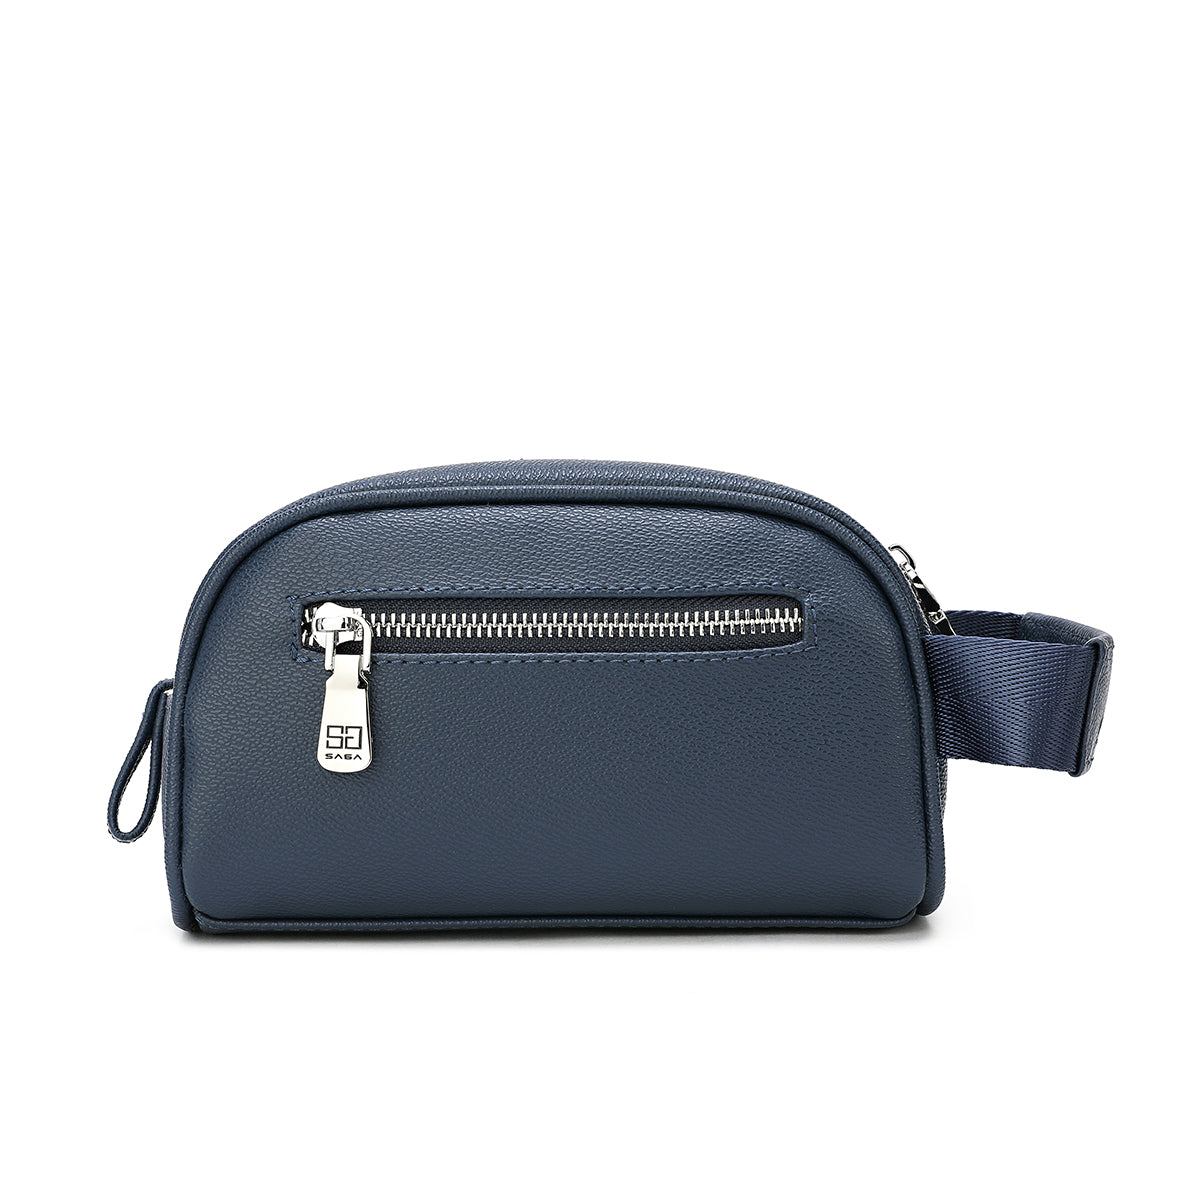 Men's handbag, classic and elegant design, width 19 cm, available in three colors